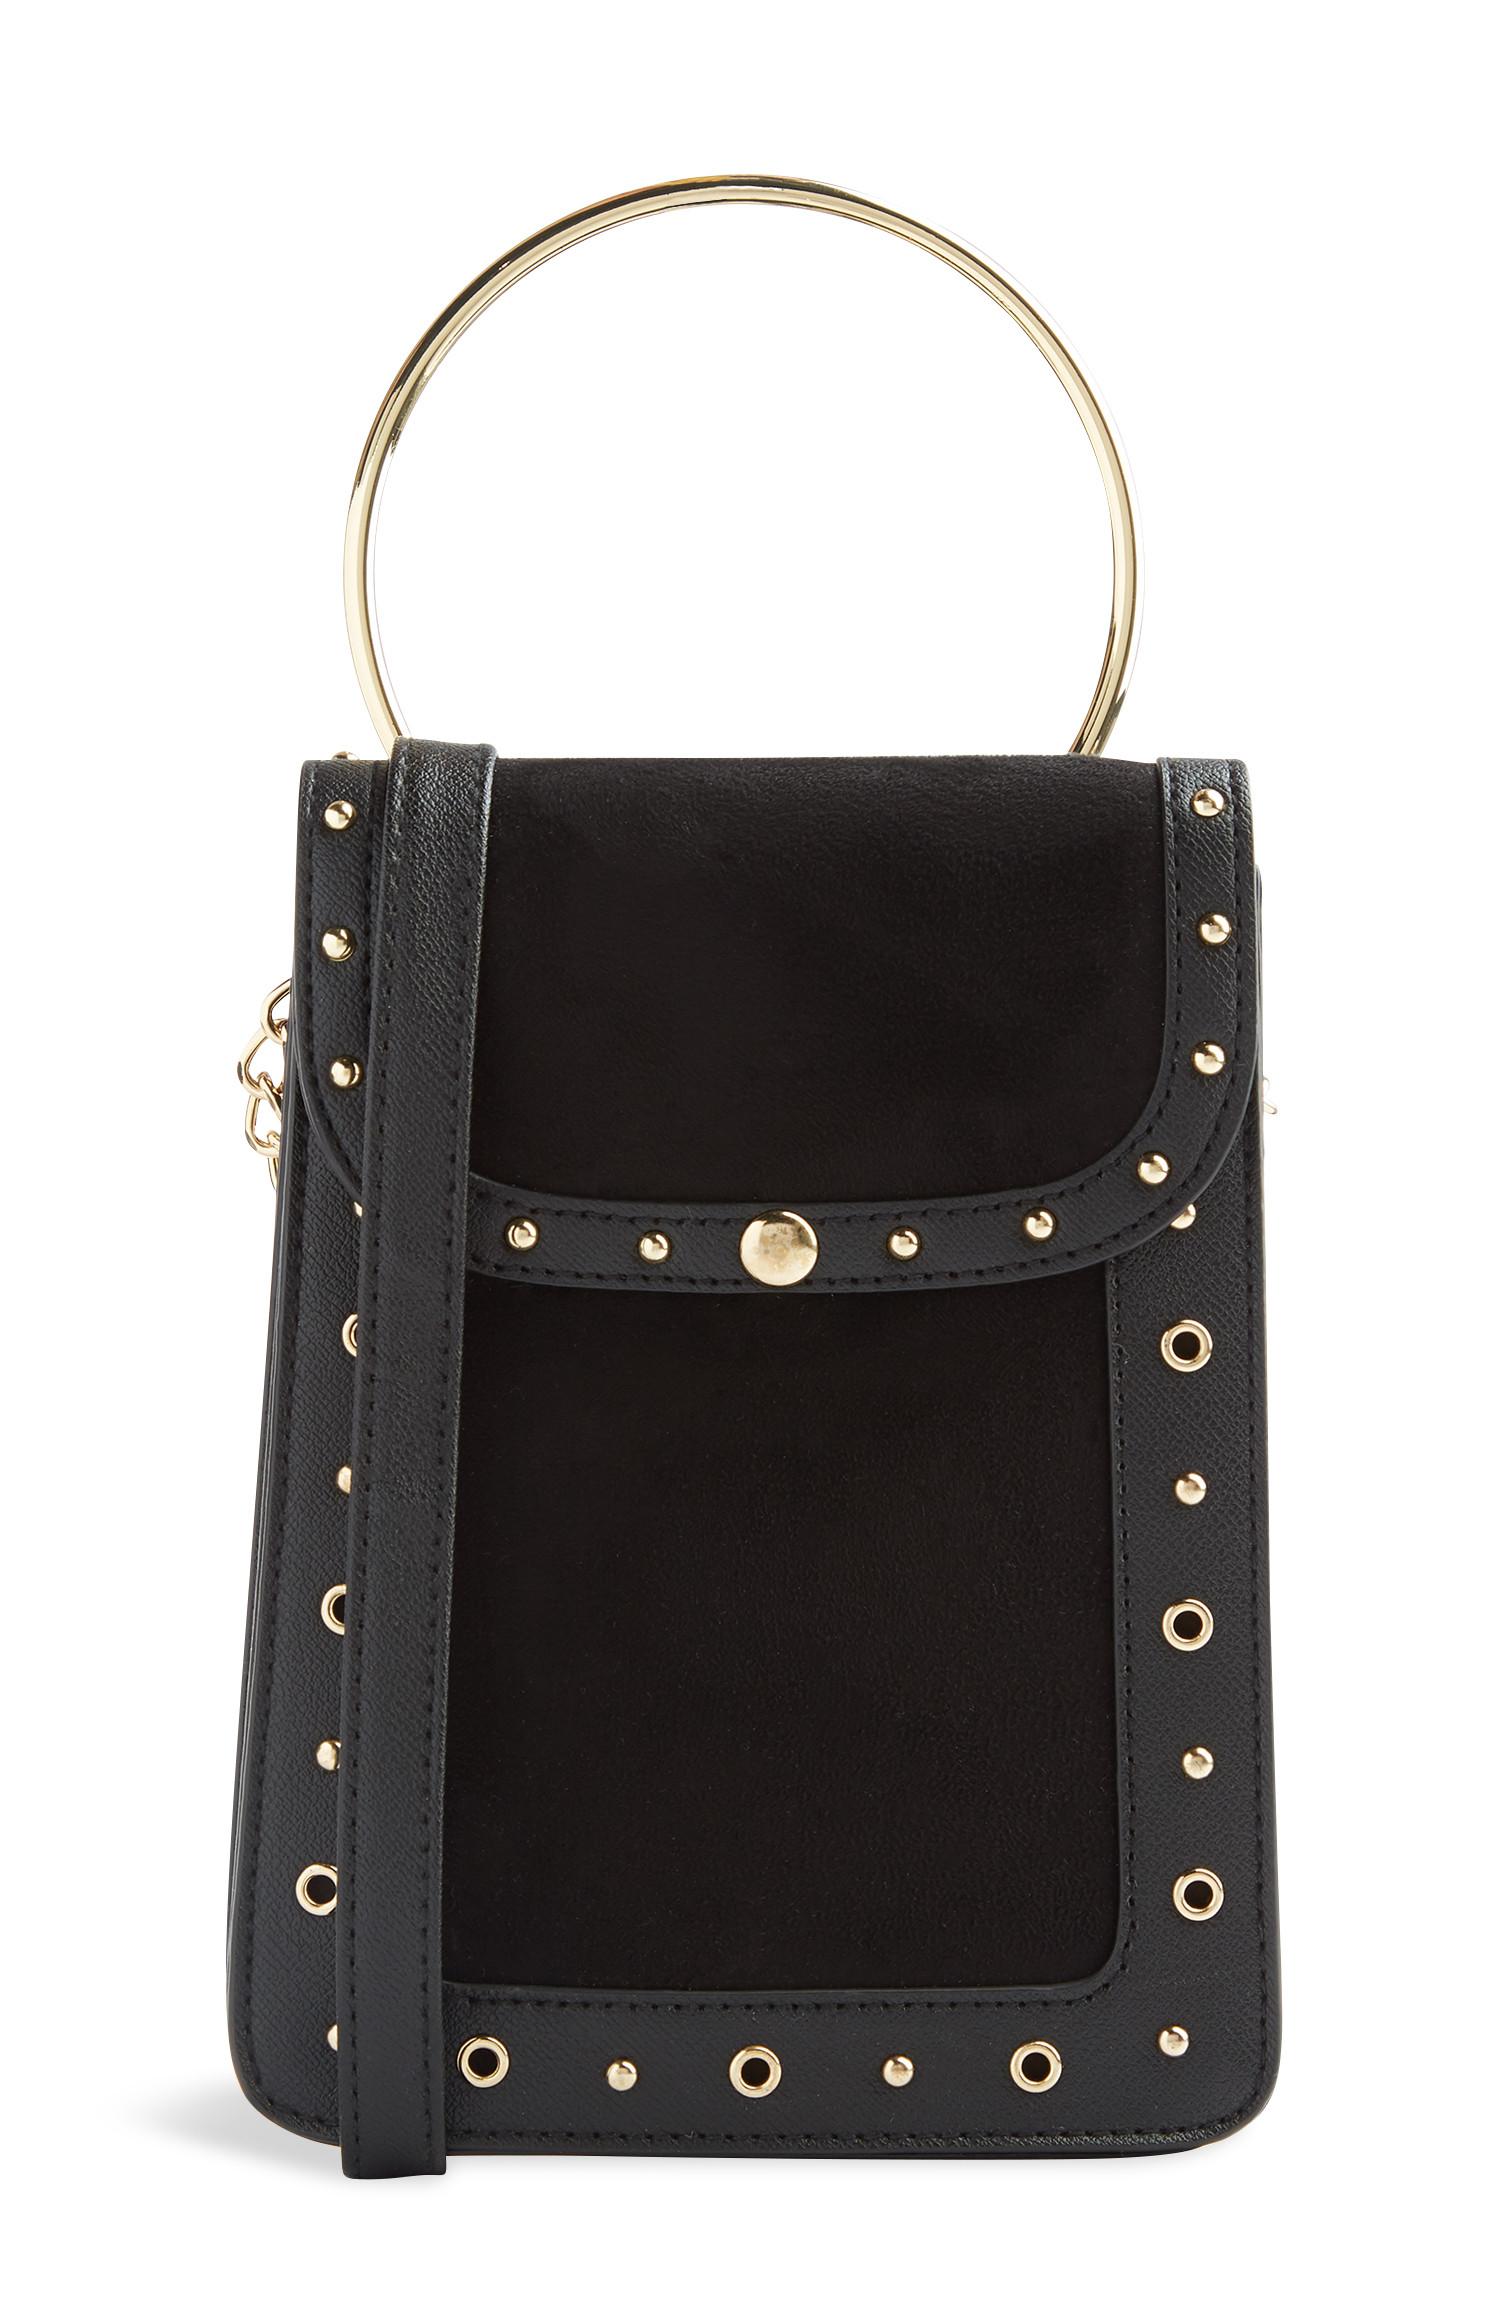 Black Ring Handle Bag | Cross body bags & Satchels | Bags purses | Womens | Categories | Primark UK